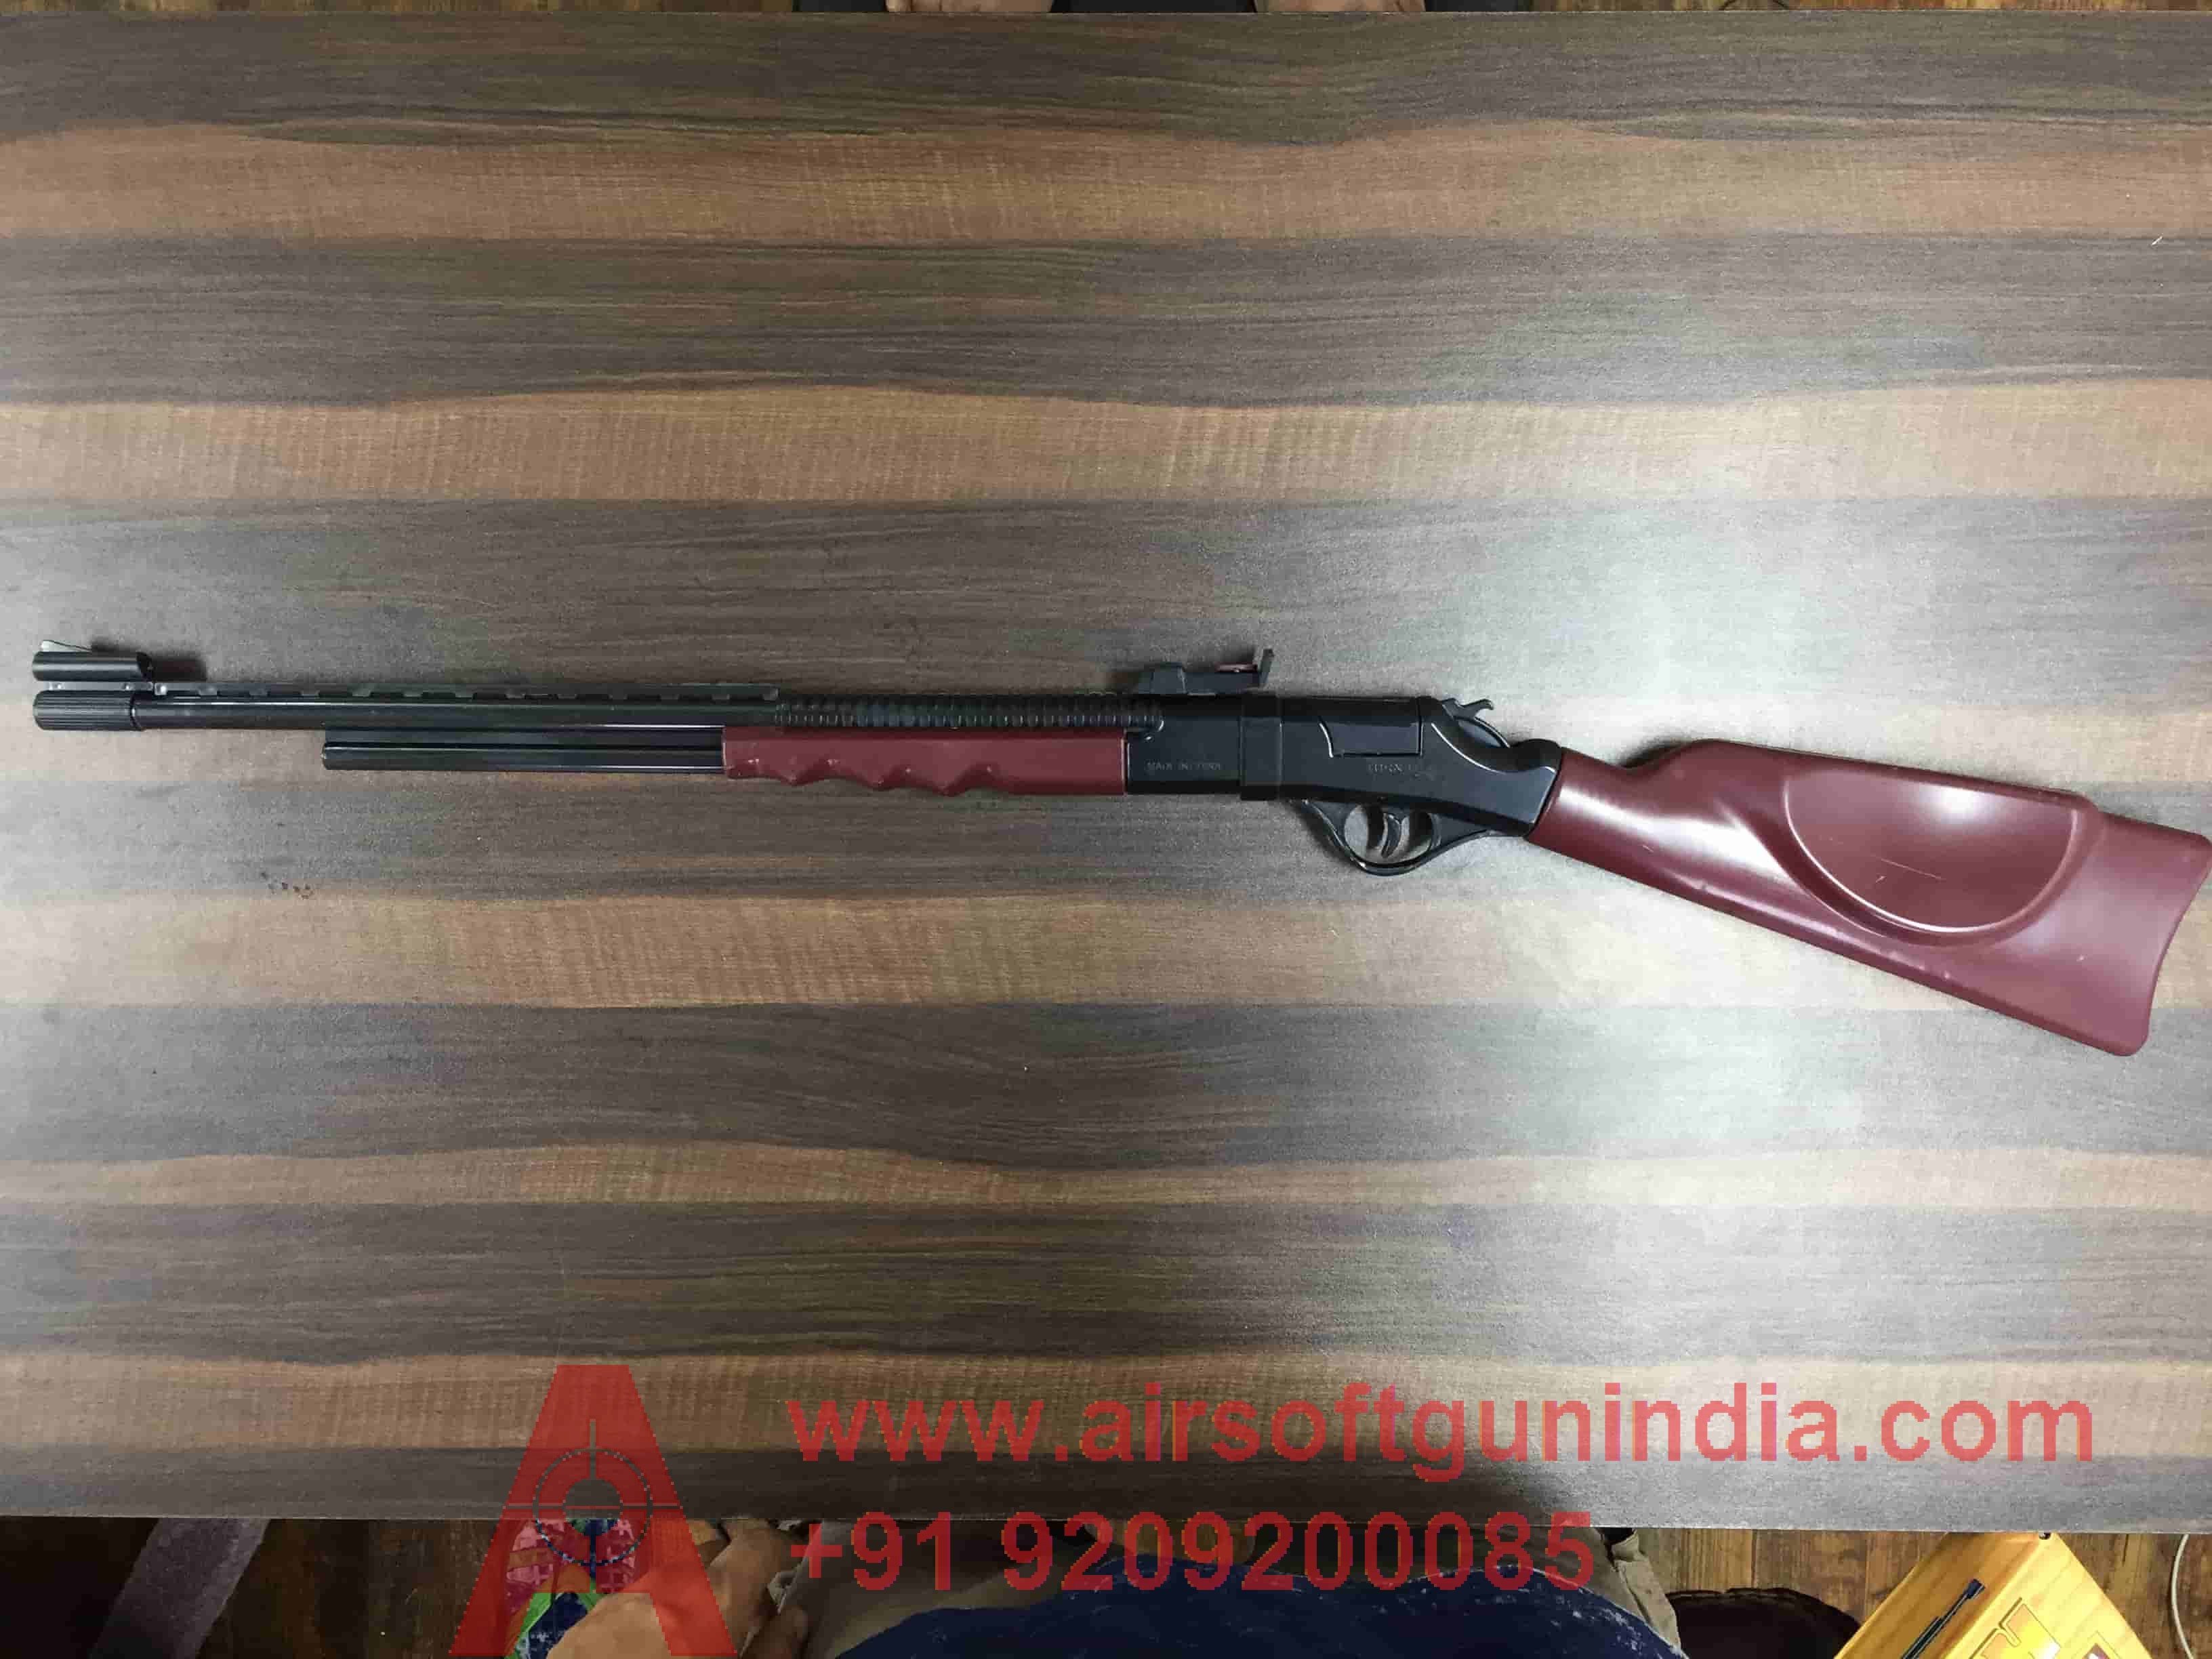 WINCHESTER 8 SHOT REPEATER CAP GUN BY AIRSOFT GUN INDIA